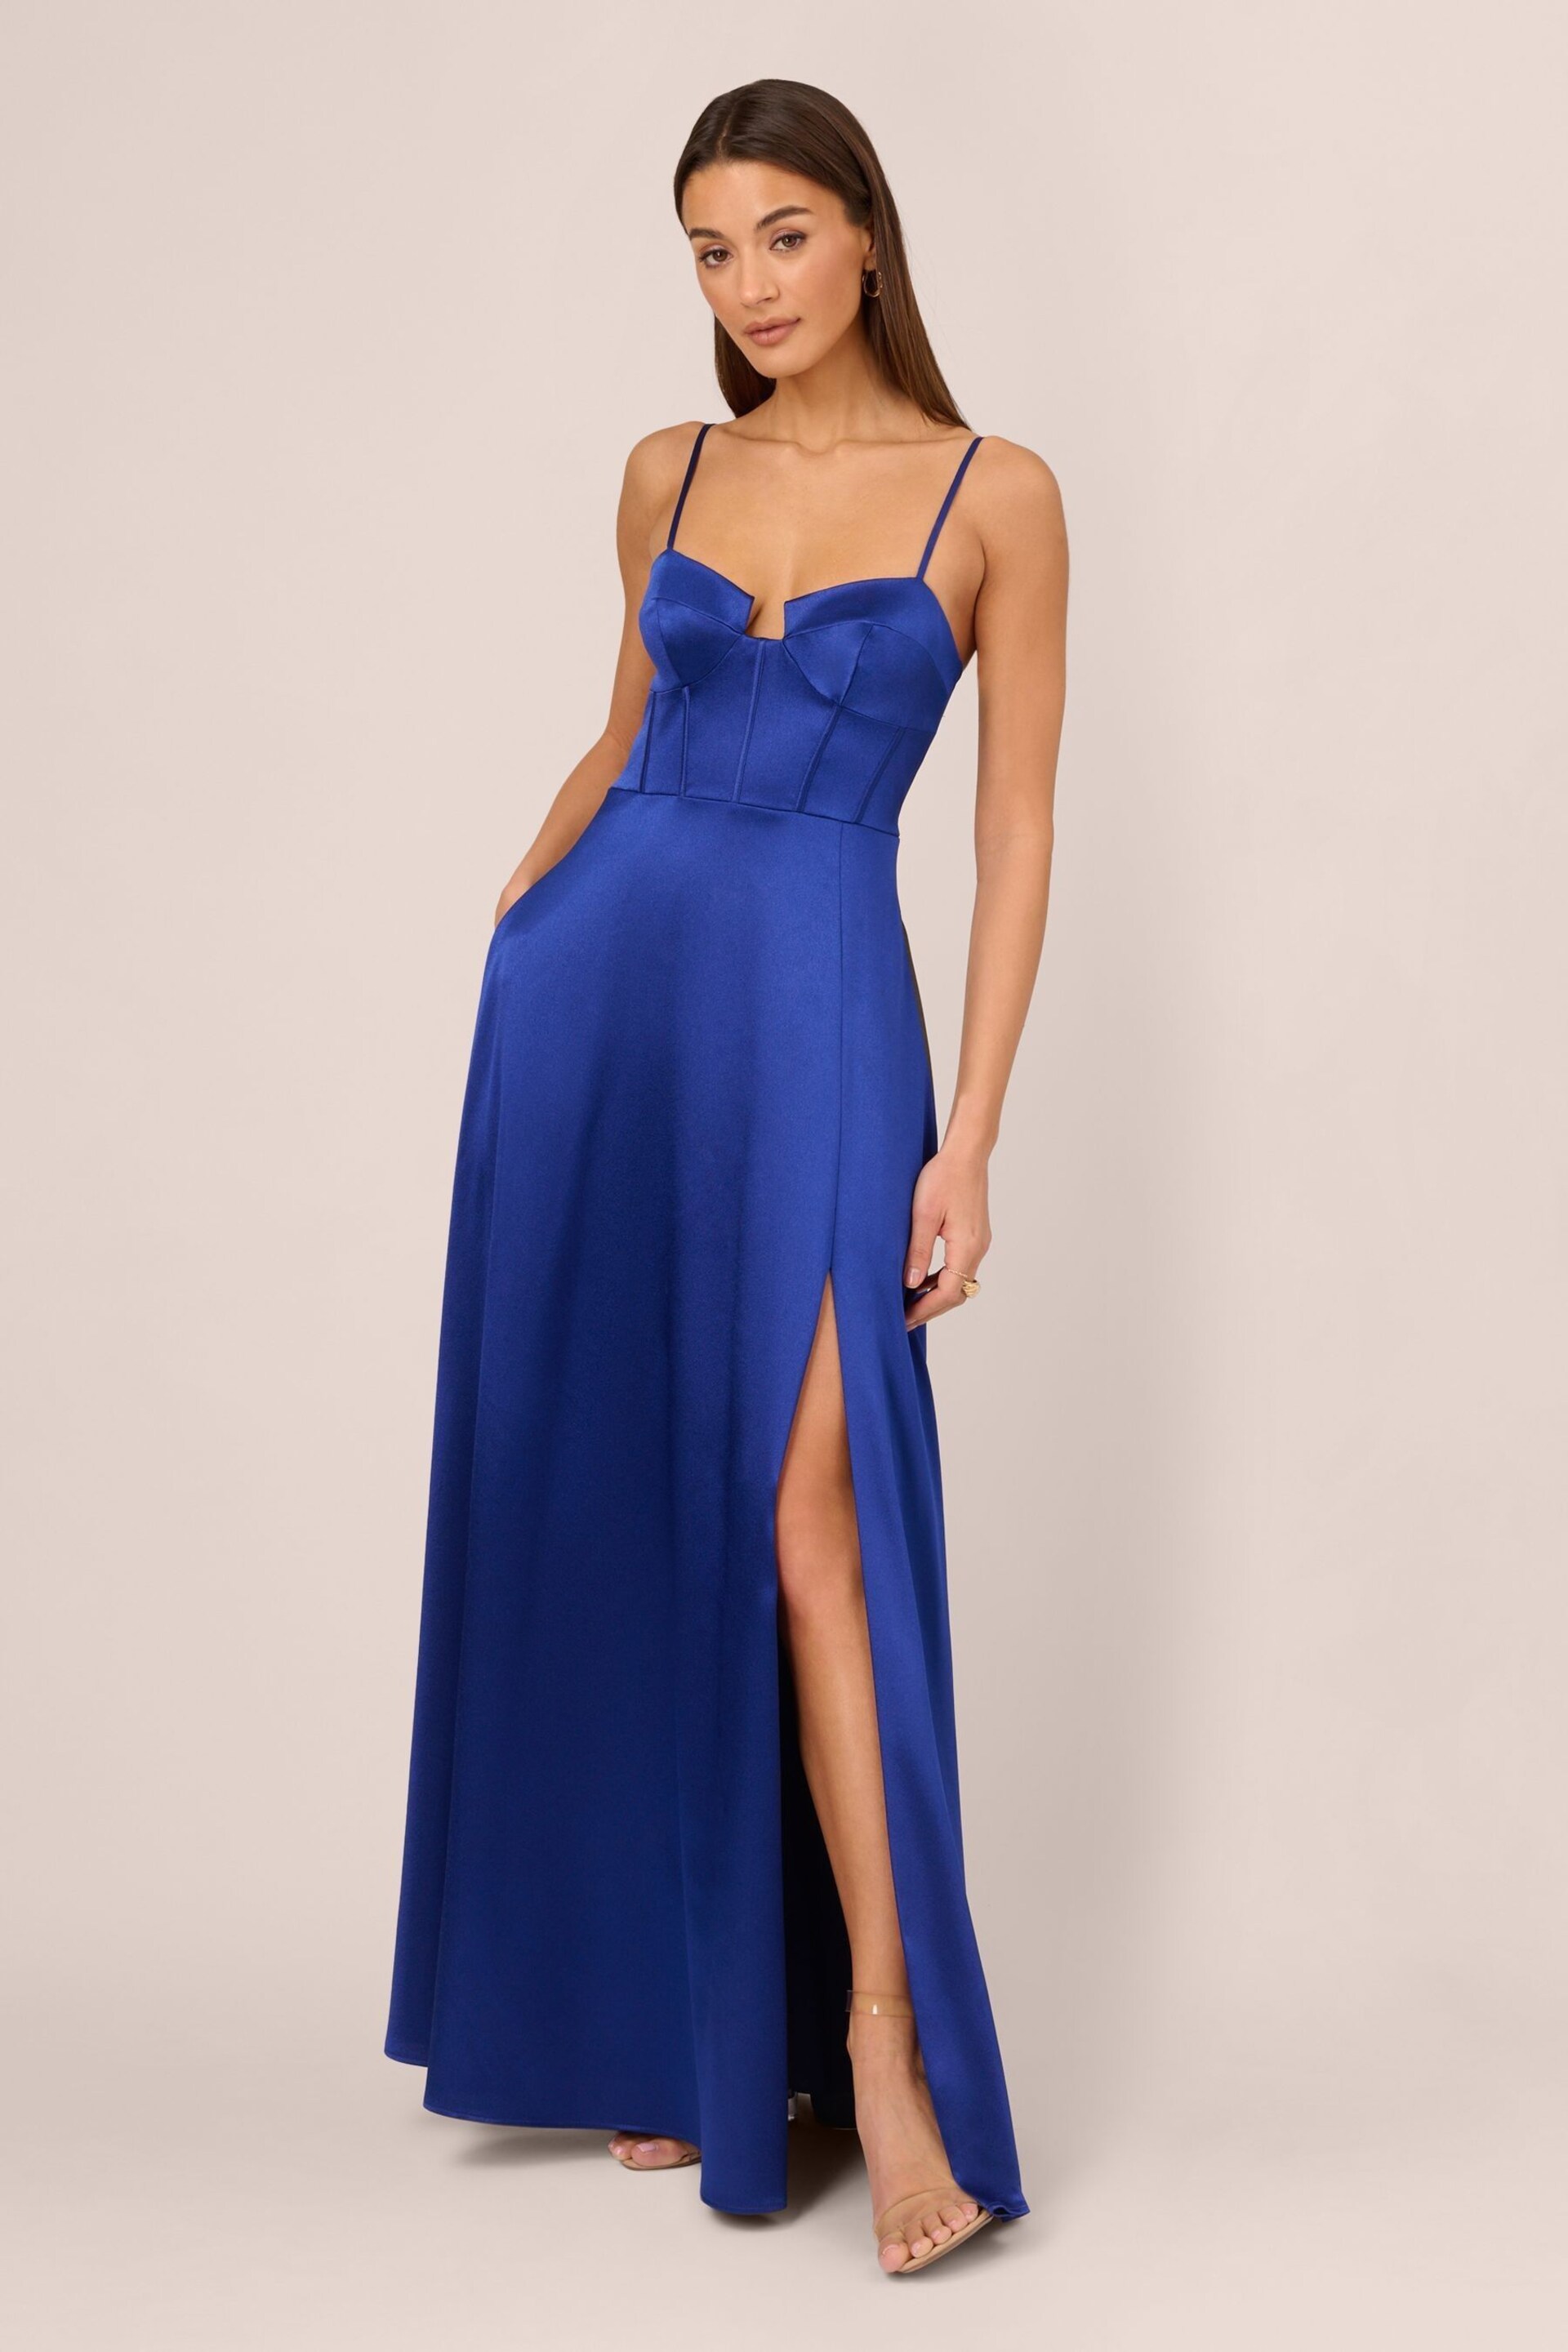 Adrianna Papell Blue Printed Midi Dress - Image 2 of 7